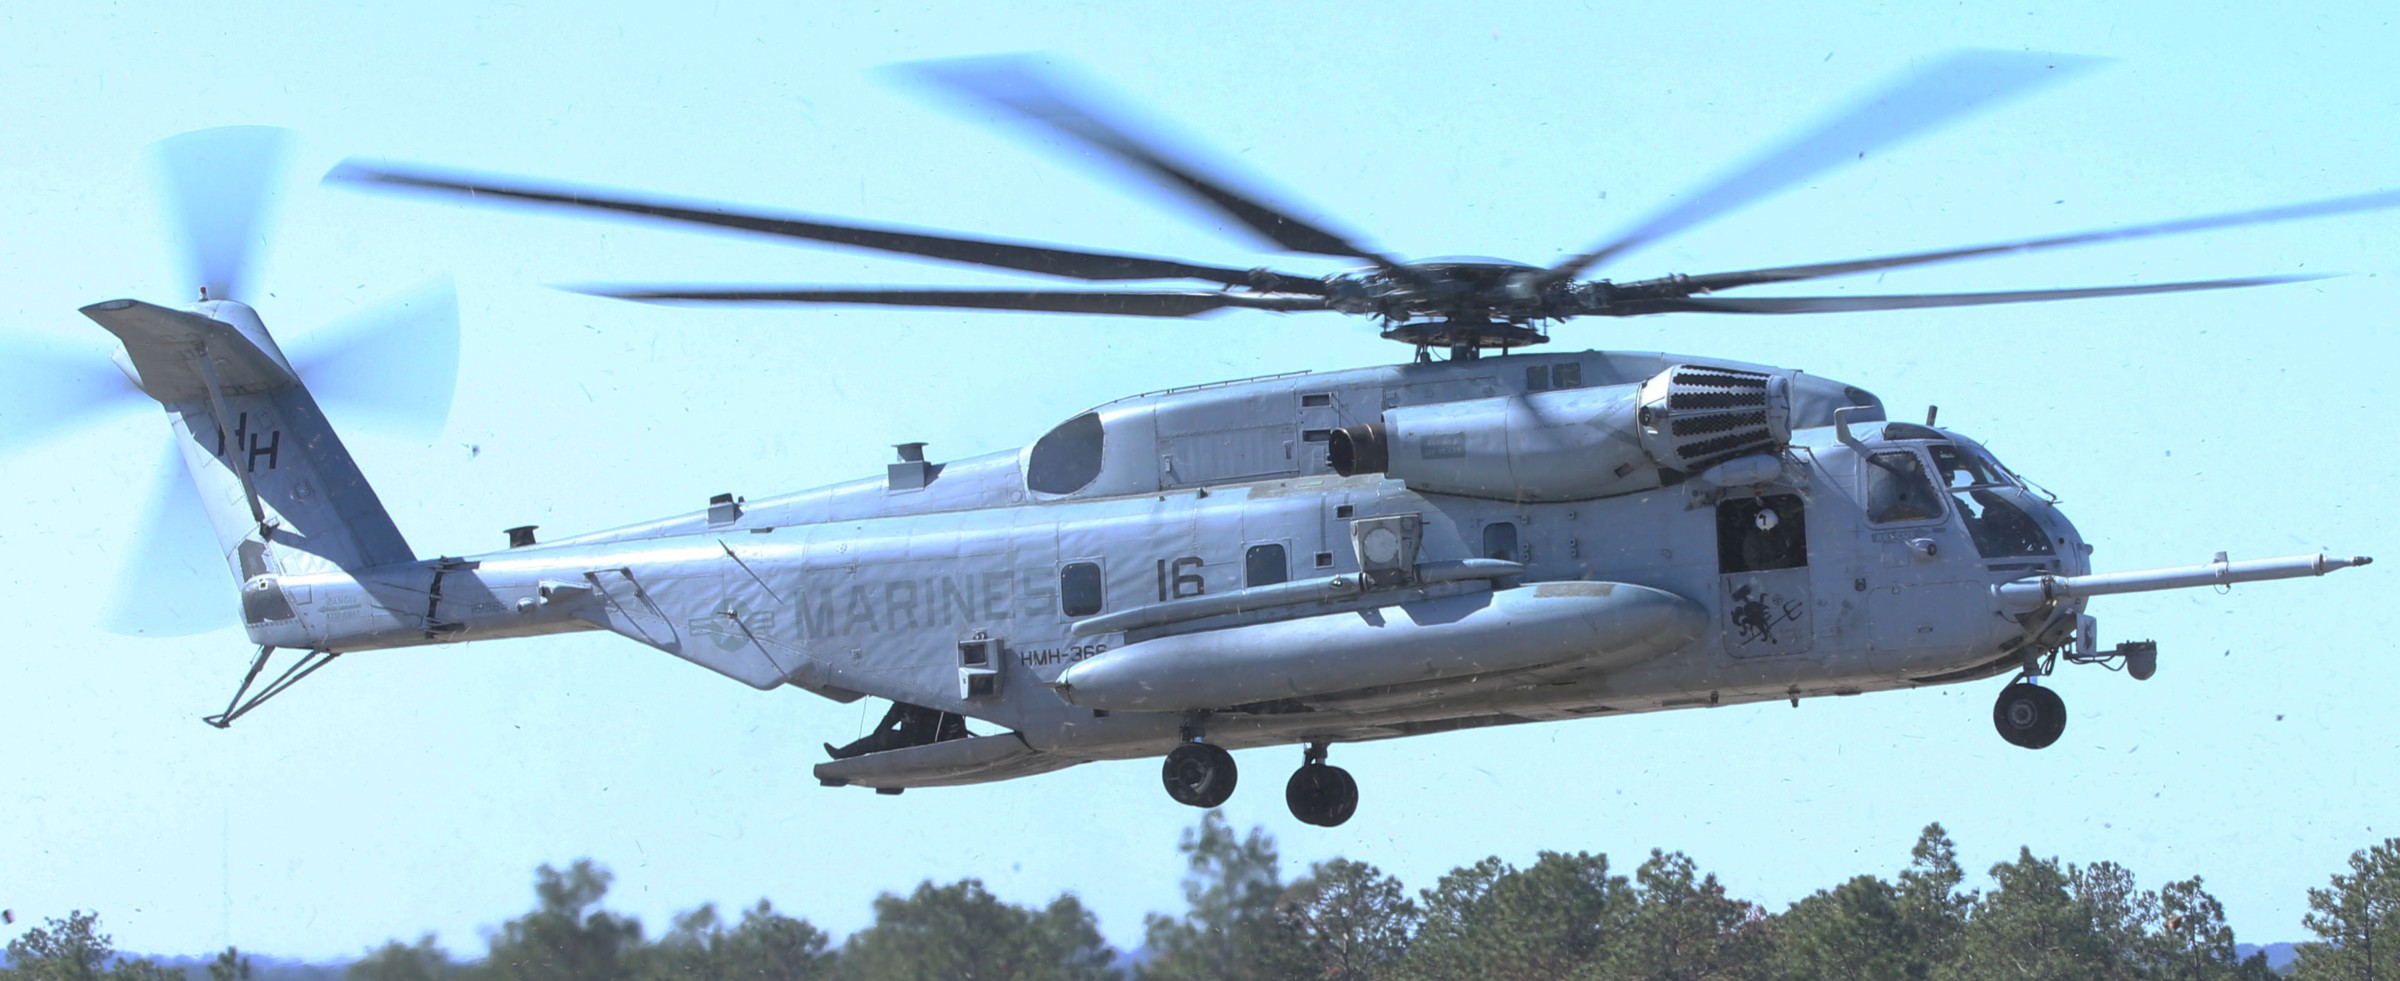 hmh-366 hammerheads marine heavy helicopter squadron usmc sikorsky ch-53e super stallion 85 fort bragg